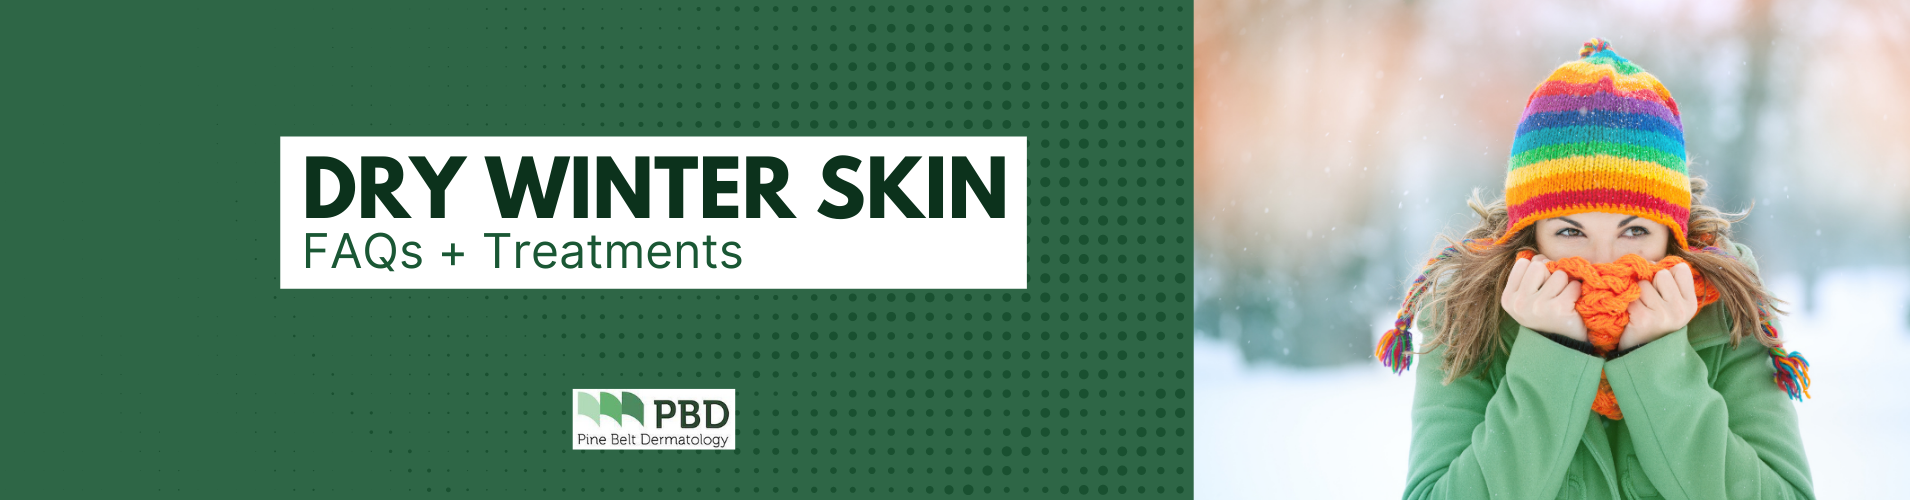 Dry Winter Skin Blog Graphic